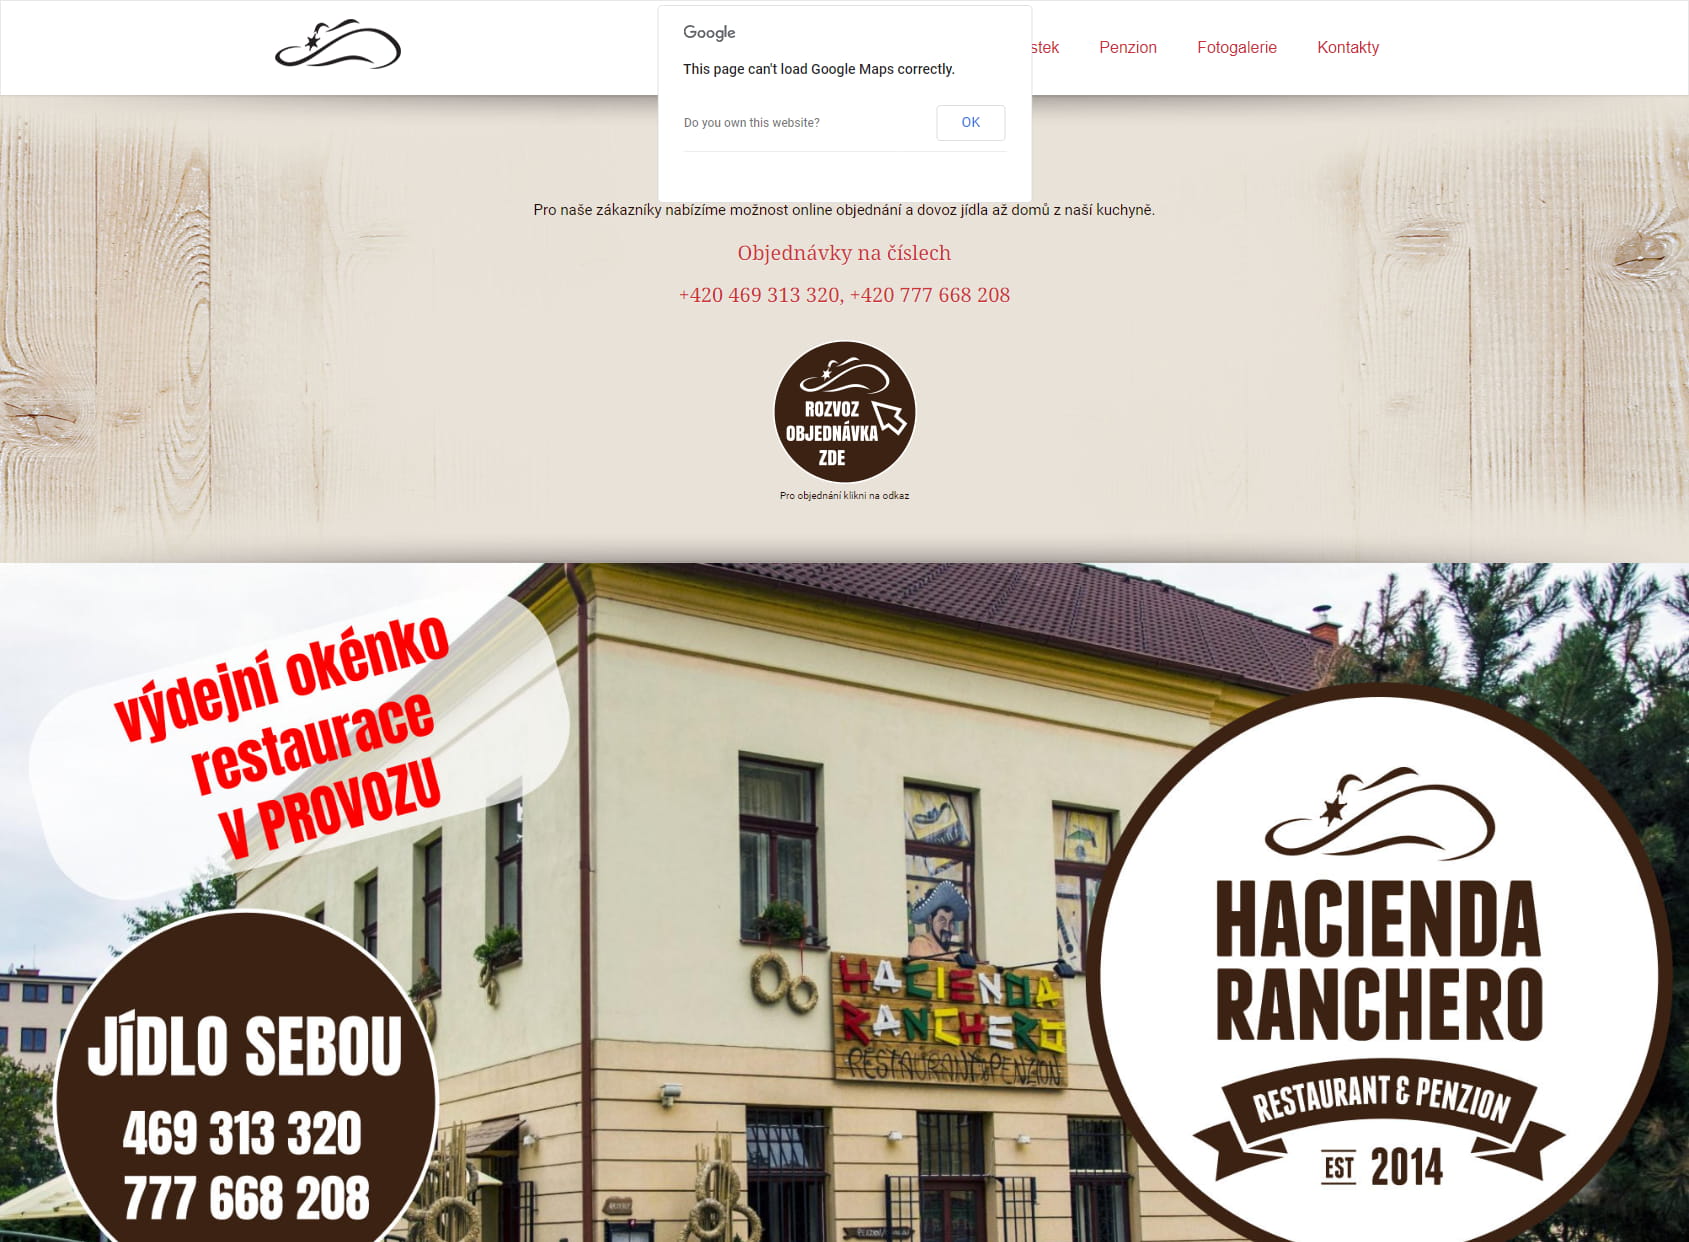 Hacienda Ranchero - restaurace a penzion